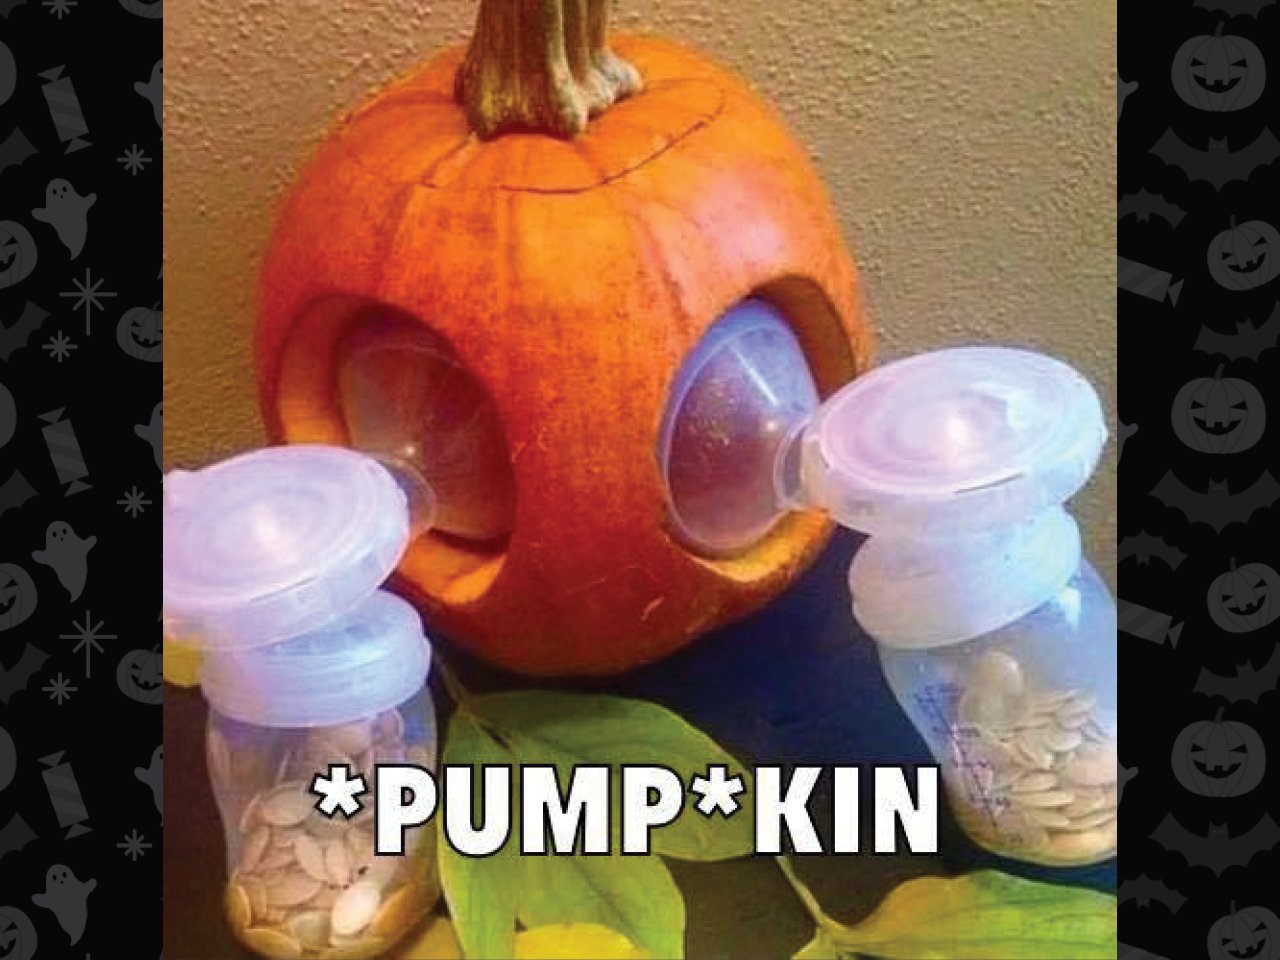 pumpkin wearing a breast pump and a caption that says *pump*kin